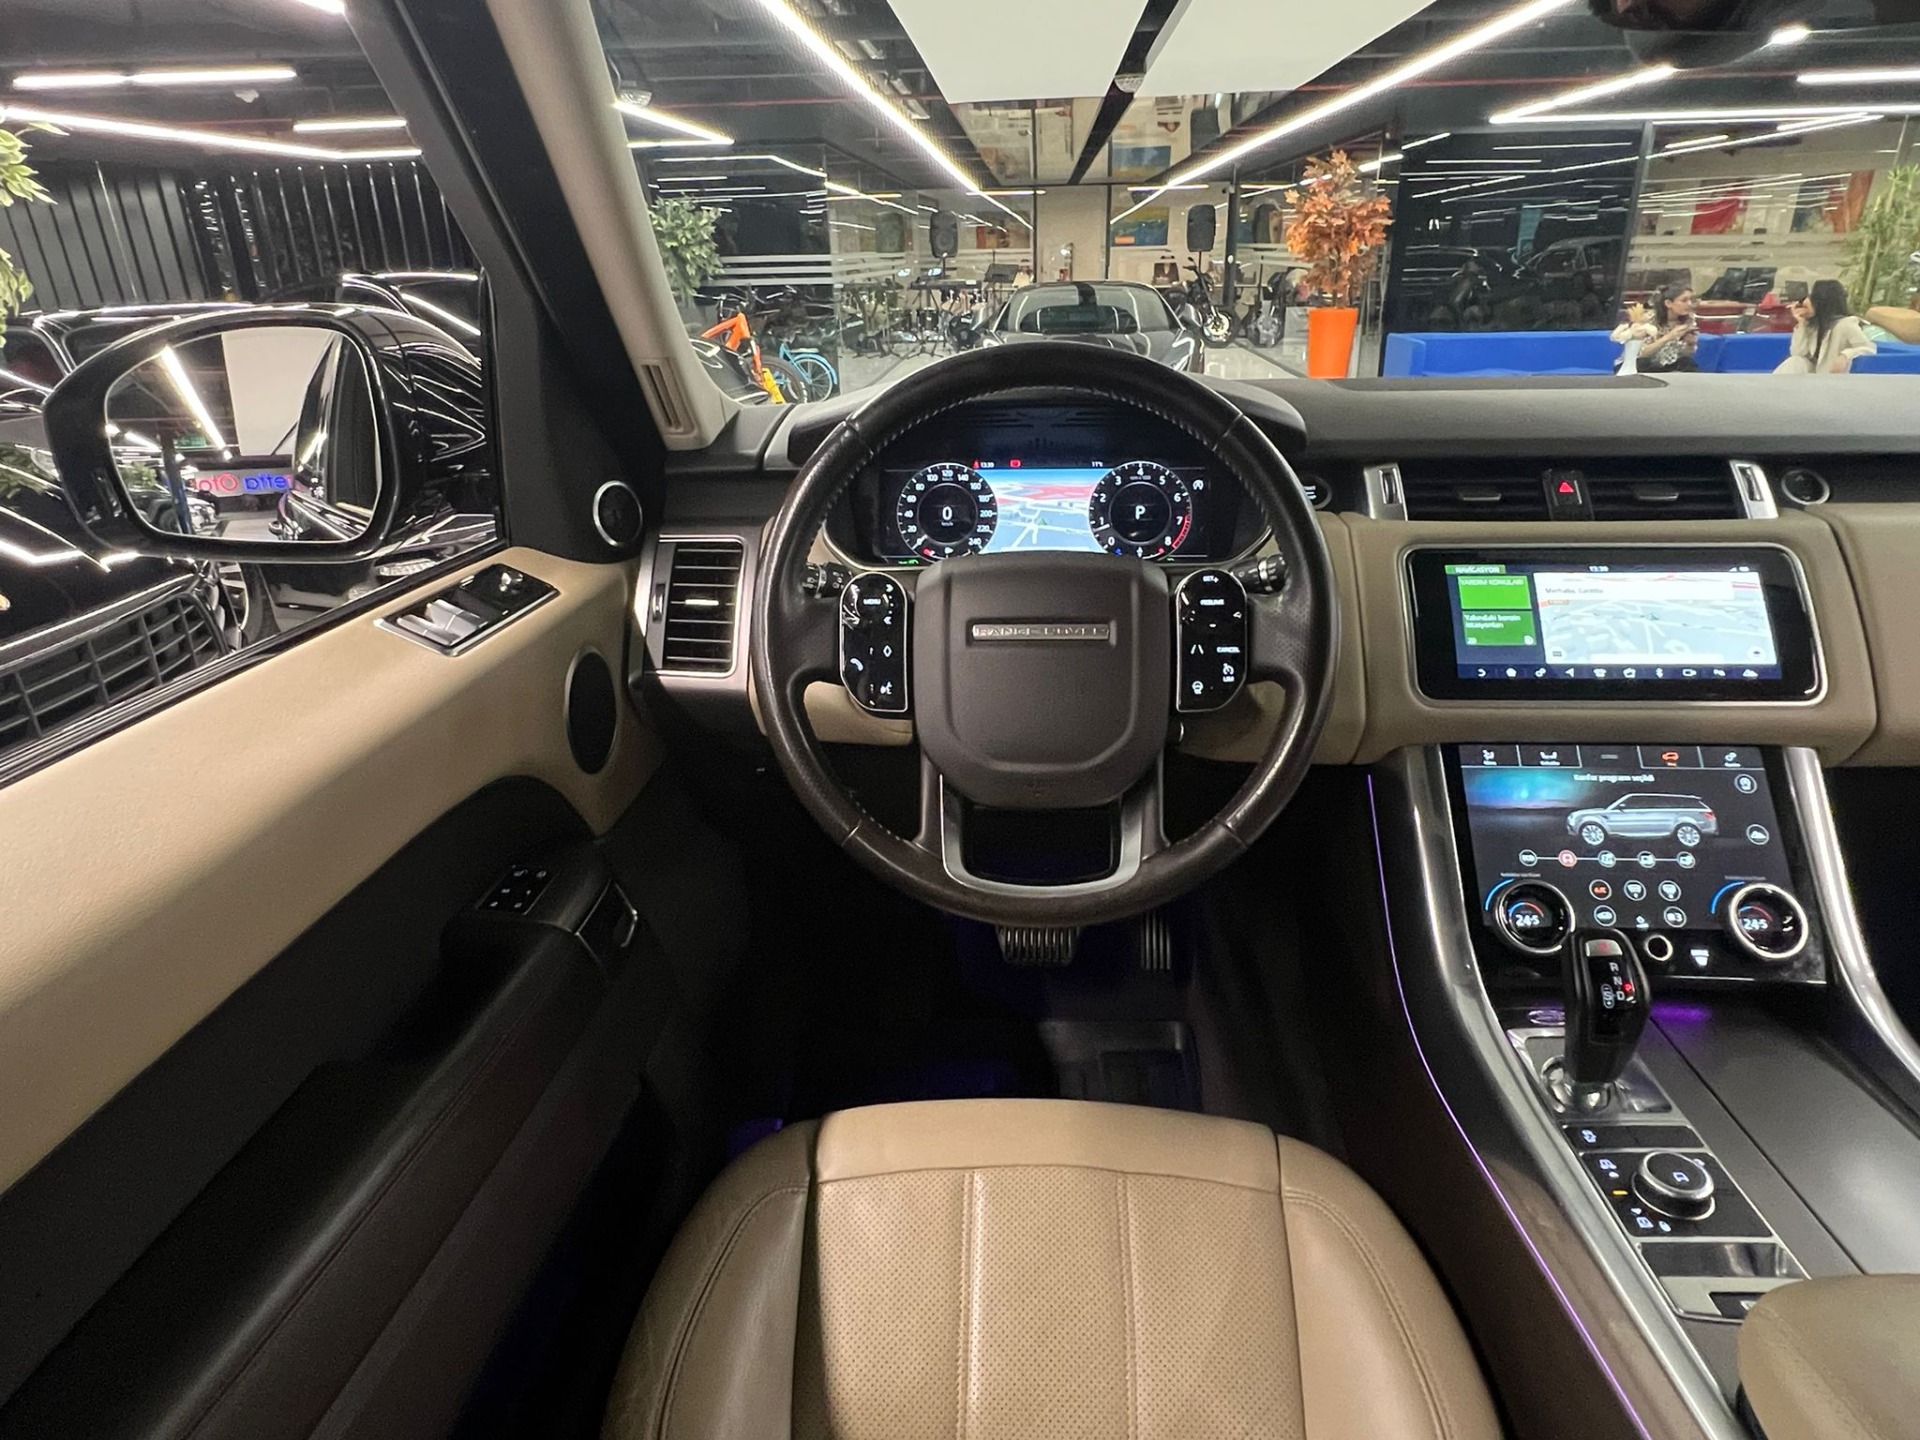 2019 Model Range Rover Sport 2.0 HSE Plus-13